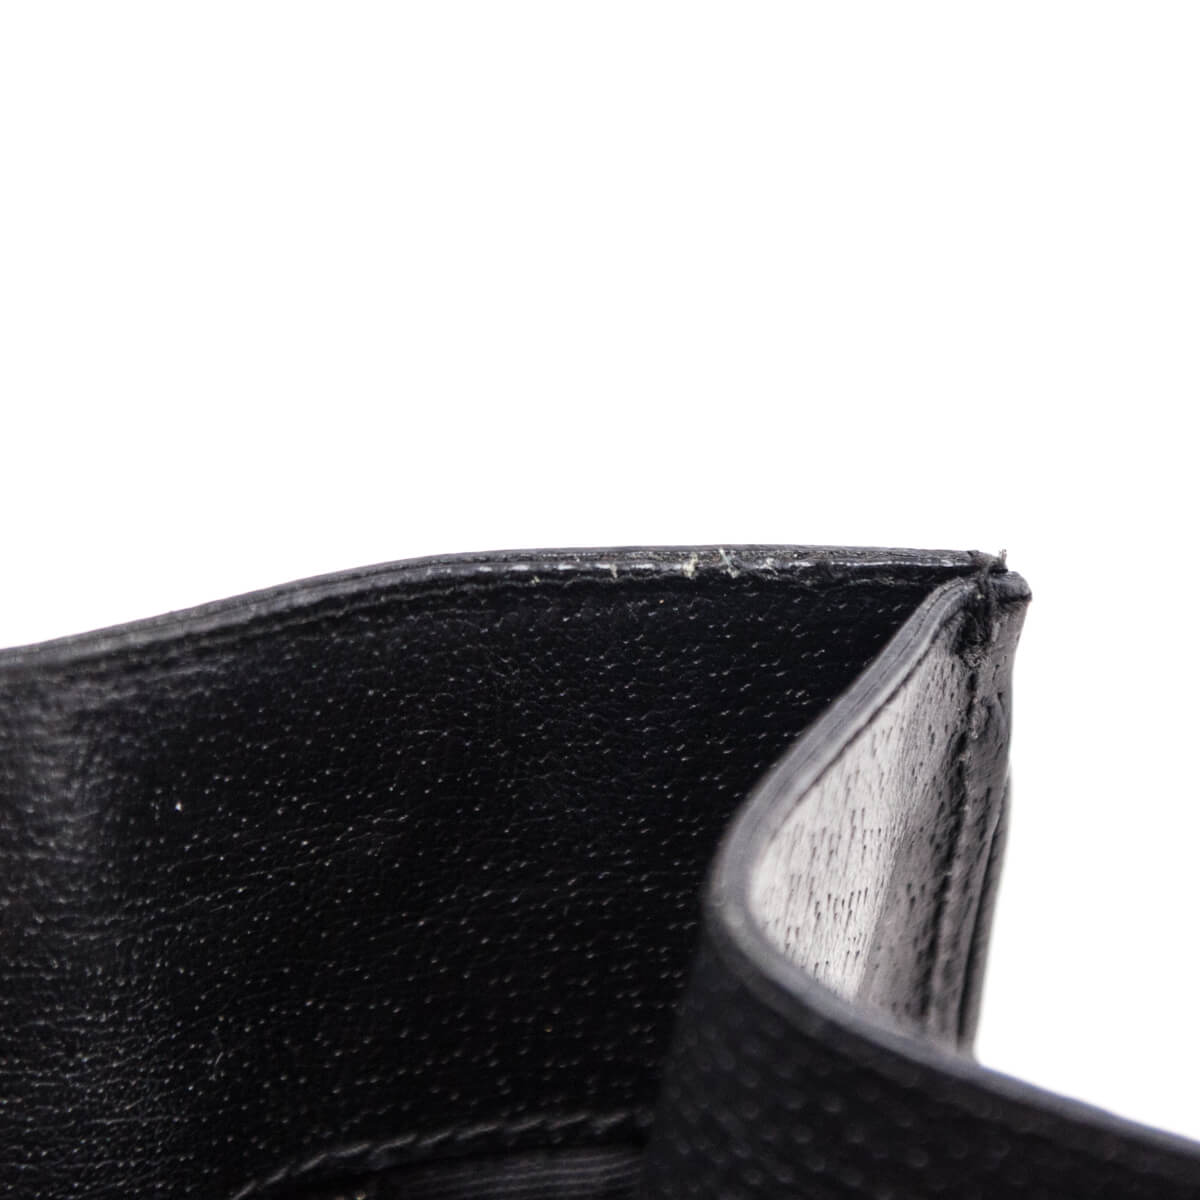 Prada Black Leather Vintage Cinghiale Tote - Love that Bag etc - Preowned Authentic Designer Handbags & Preloved Fashions